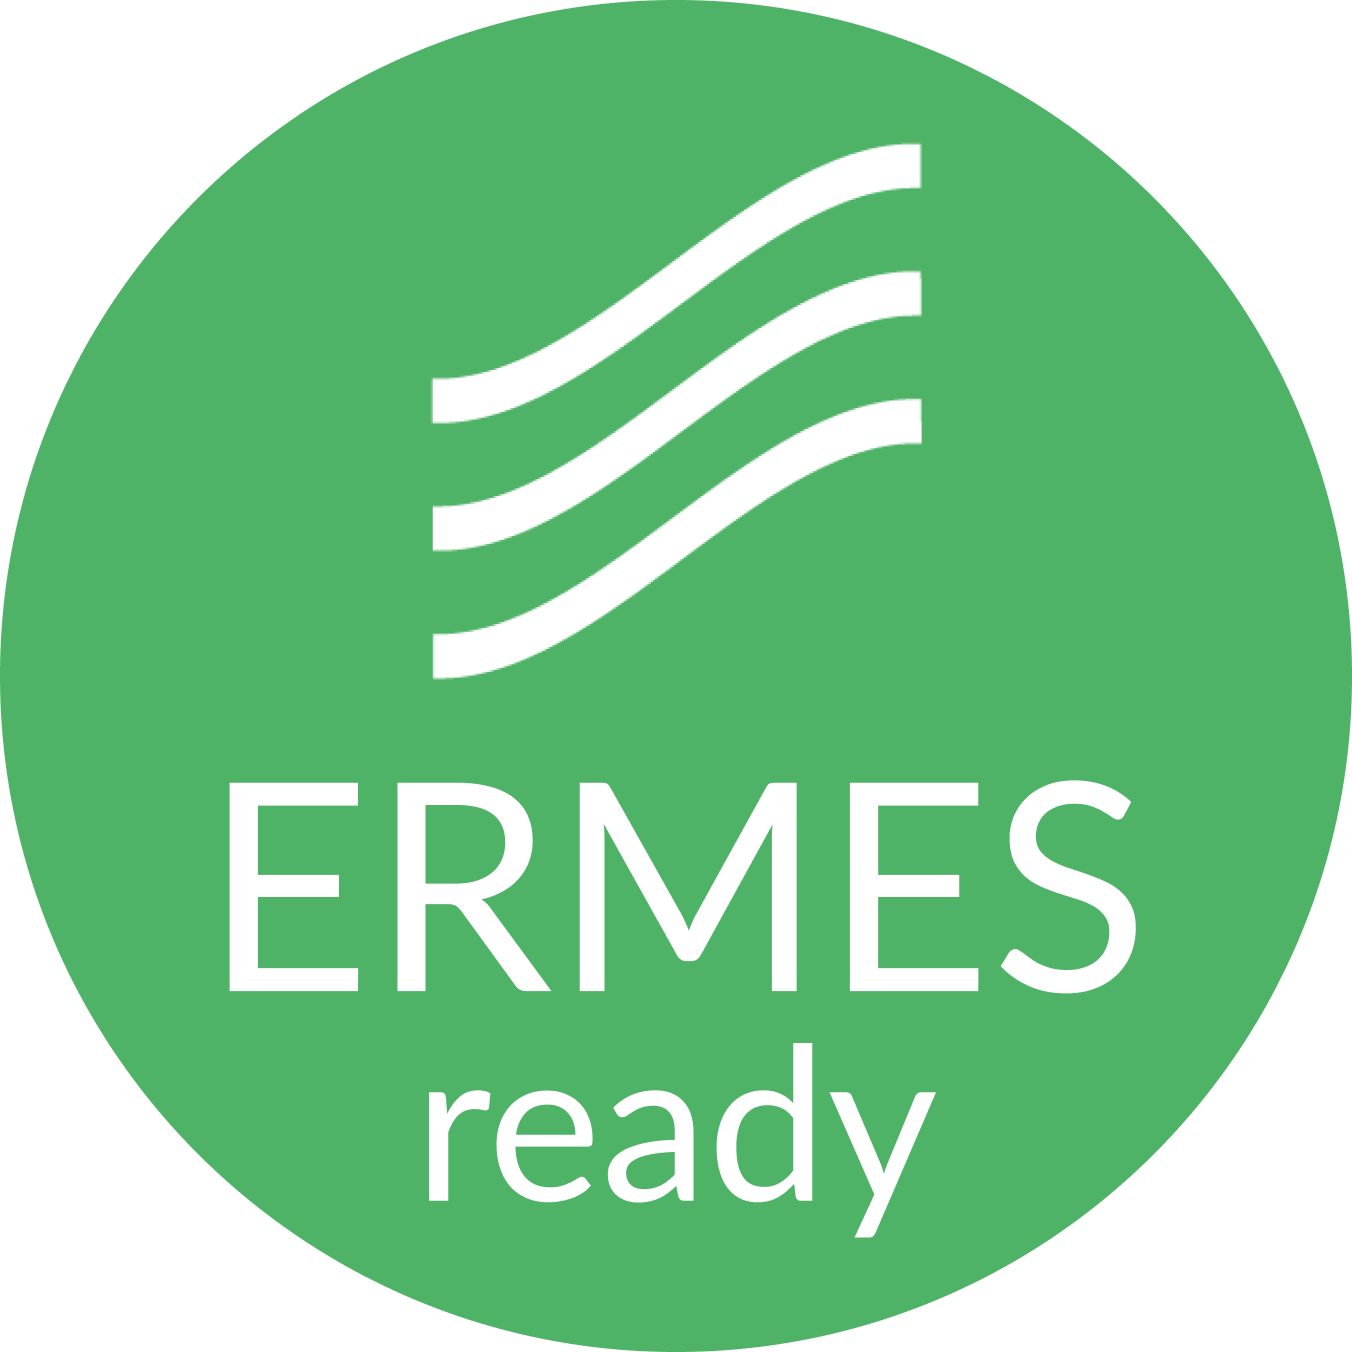 ERMES-ready-logo-topic-heading